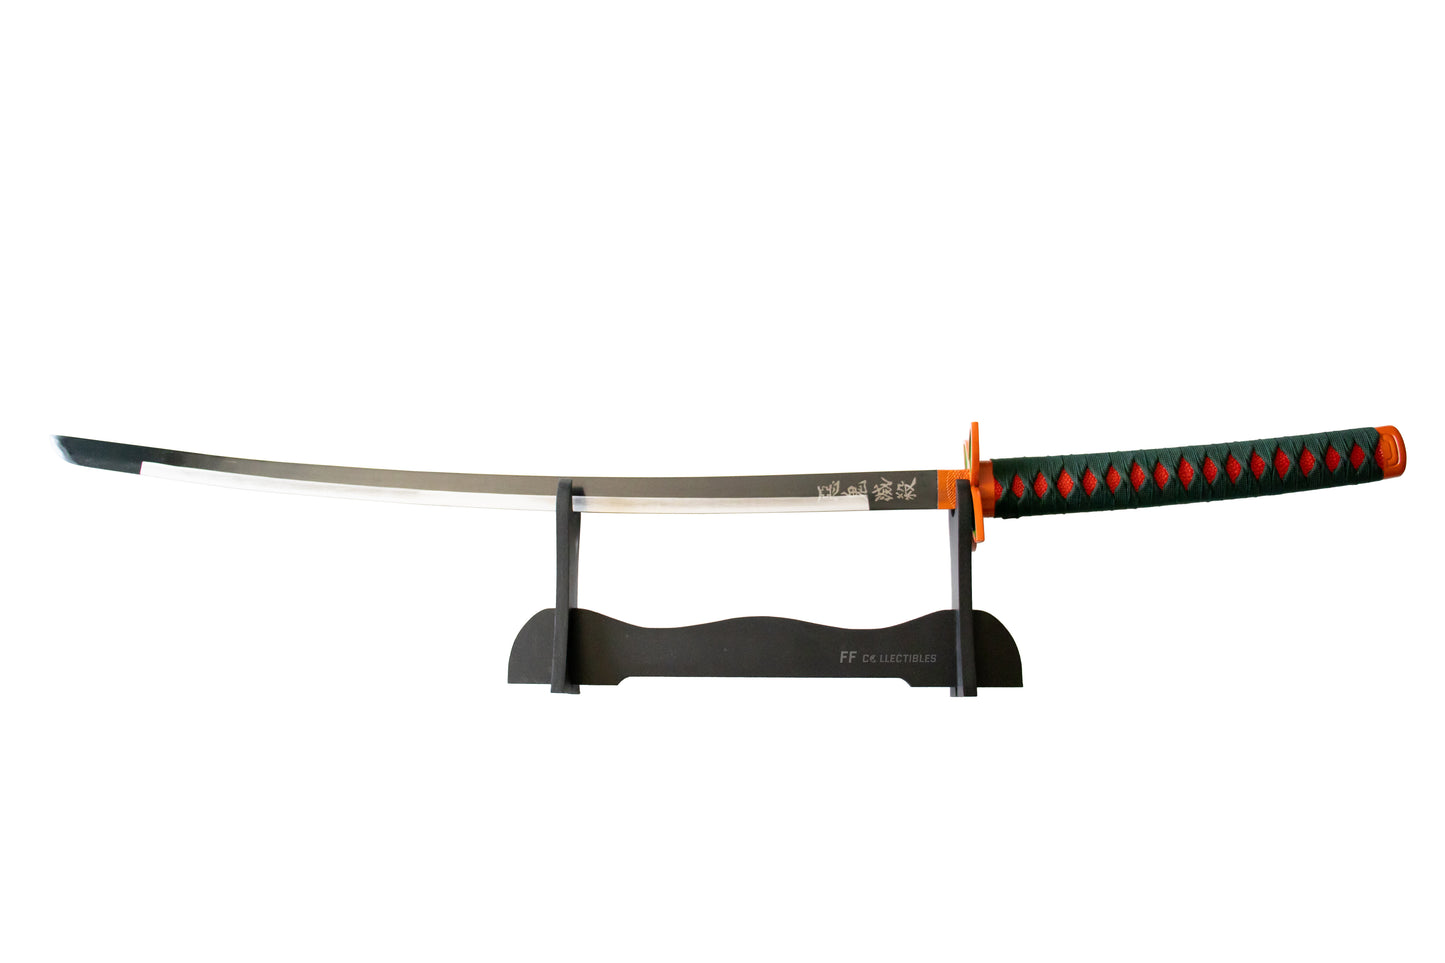 DEMON SLAYER - SHINOBU KOCHO'S NICHIRIN SWORD (w FREE sword stand + BELT)